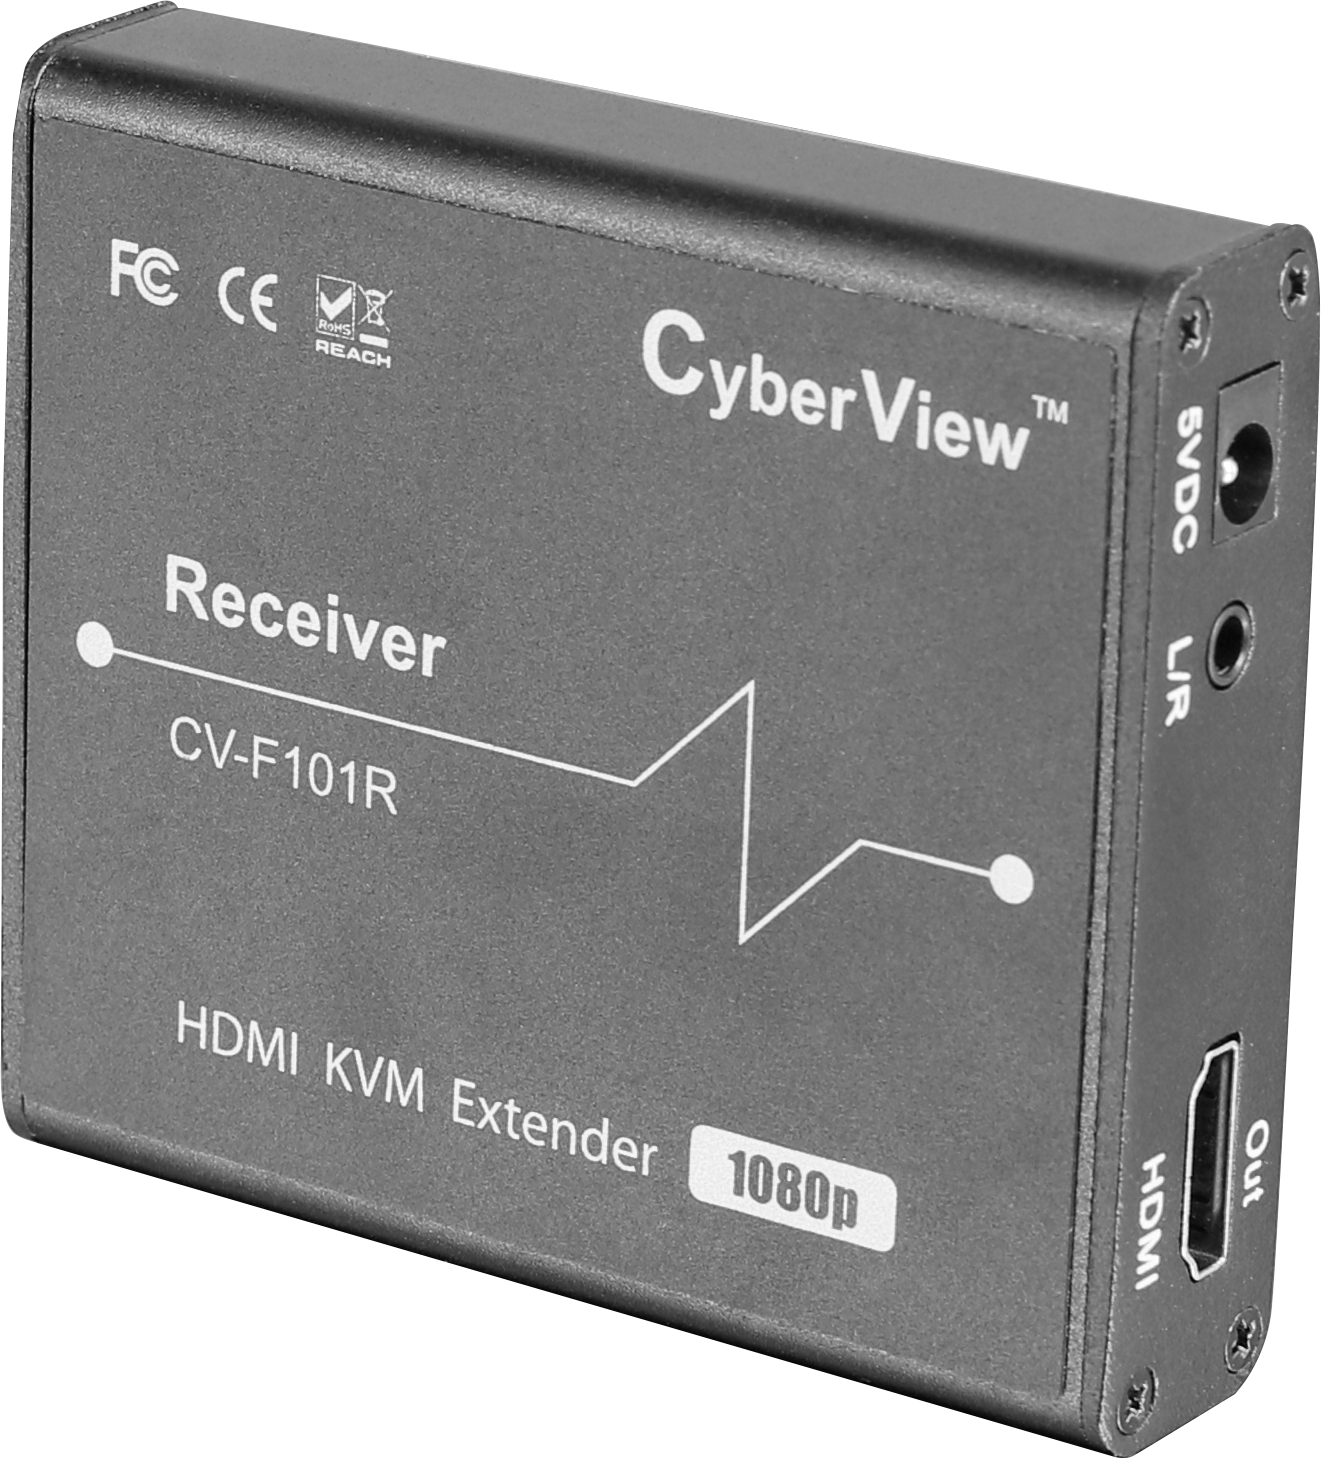 CV-F101R, Cyberview 1080p HDMI KVM Extender (Receiver)